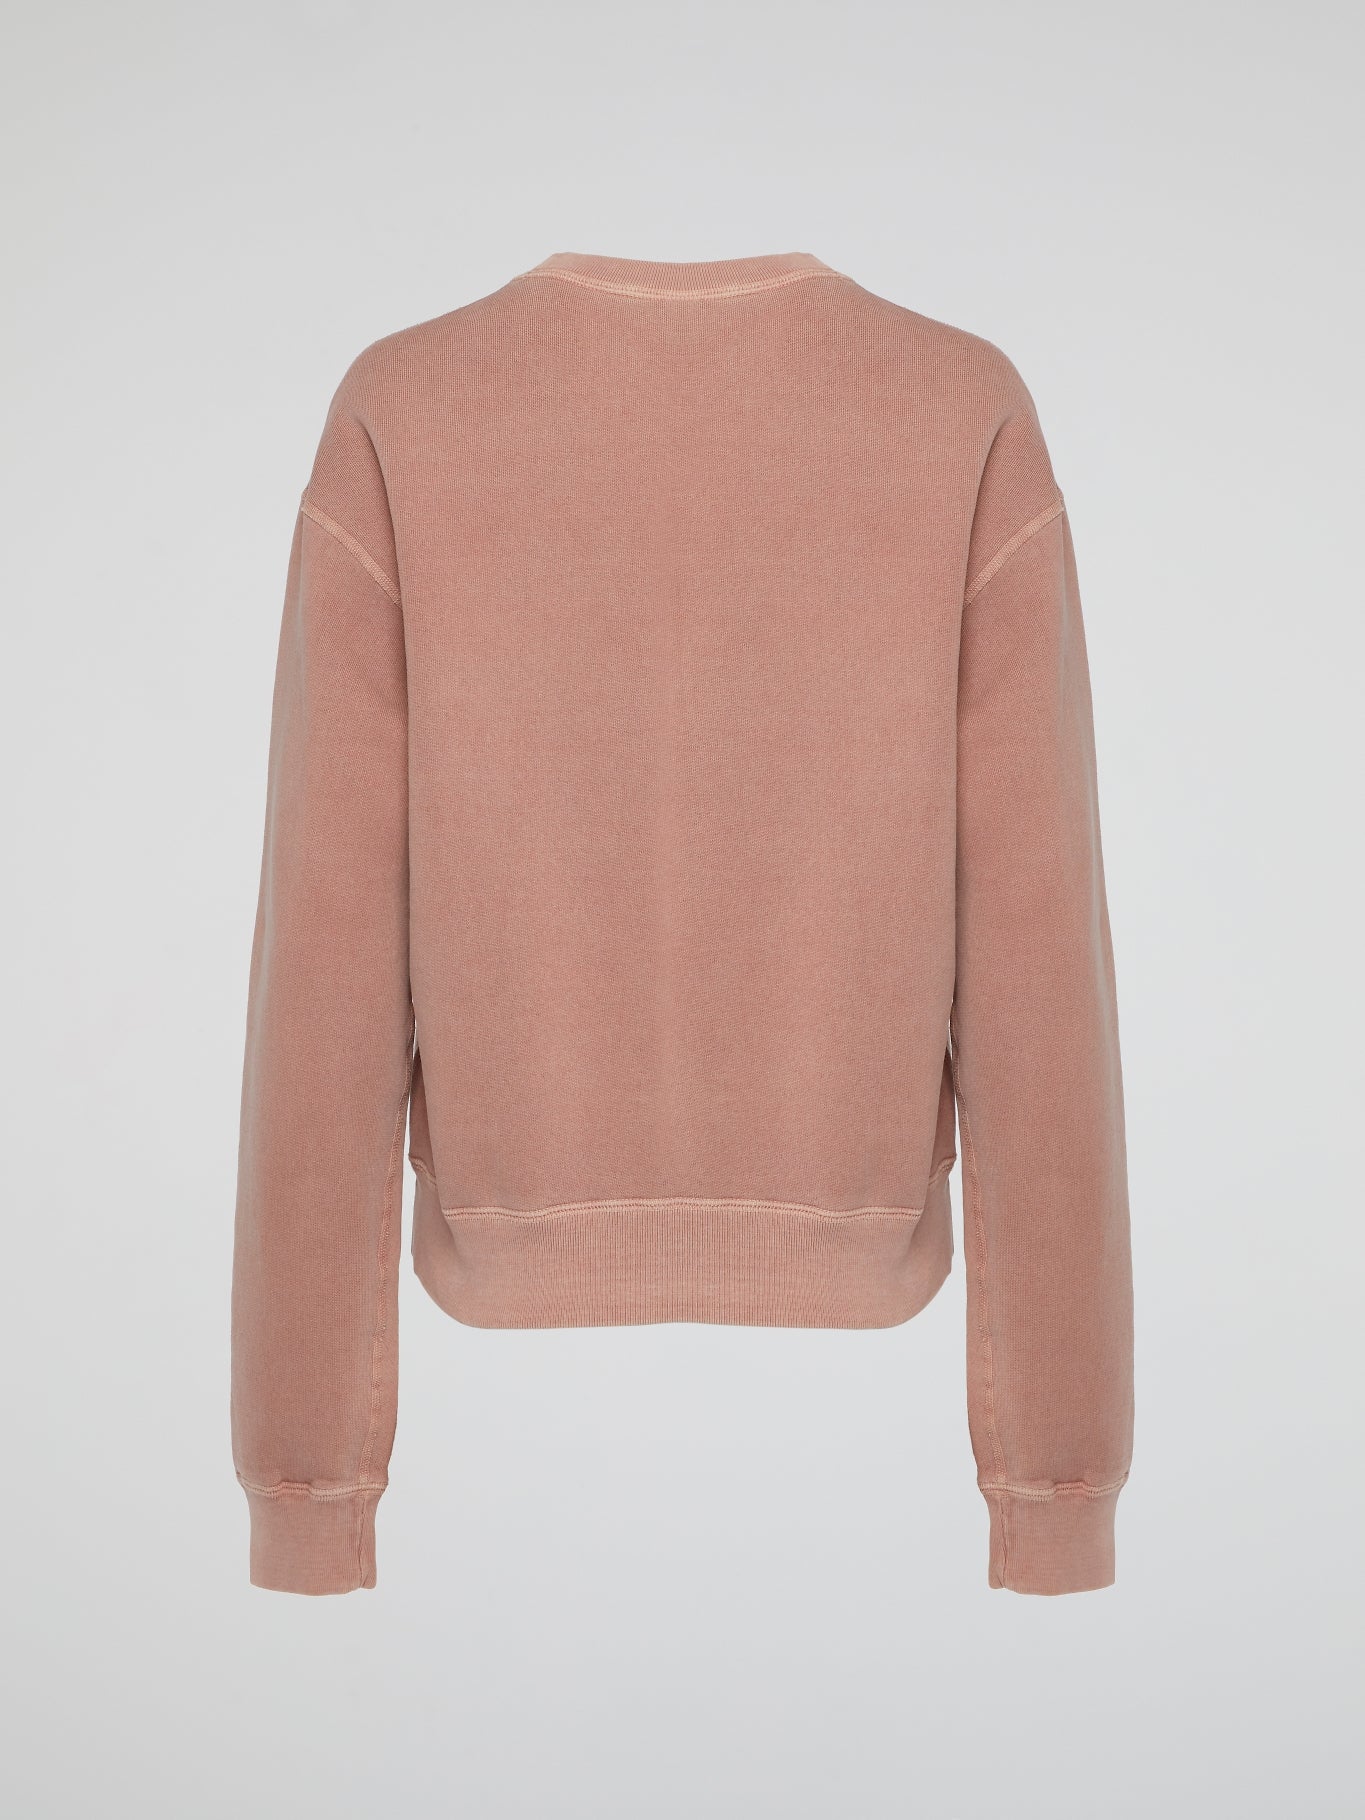 Pink Garment Dye Crop Top Crewneck Shirt – Maison-B-More Global Store